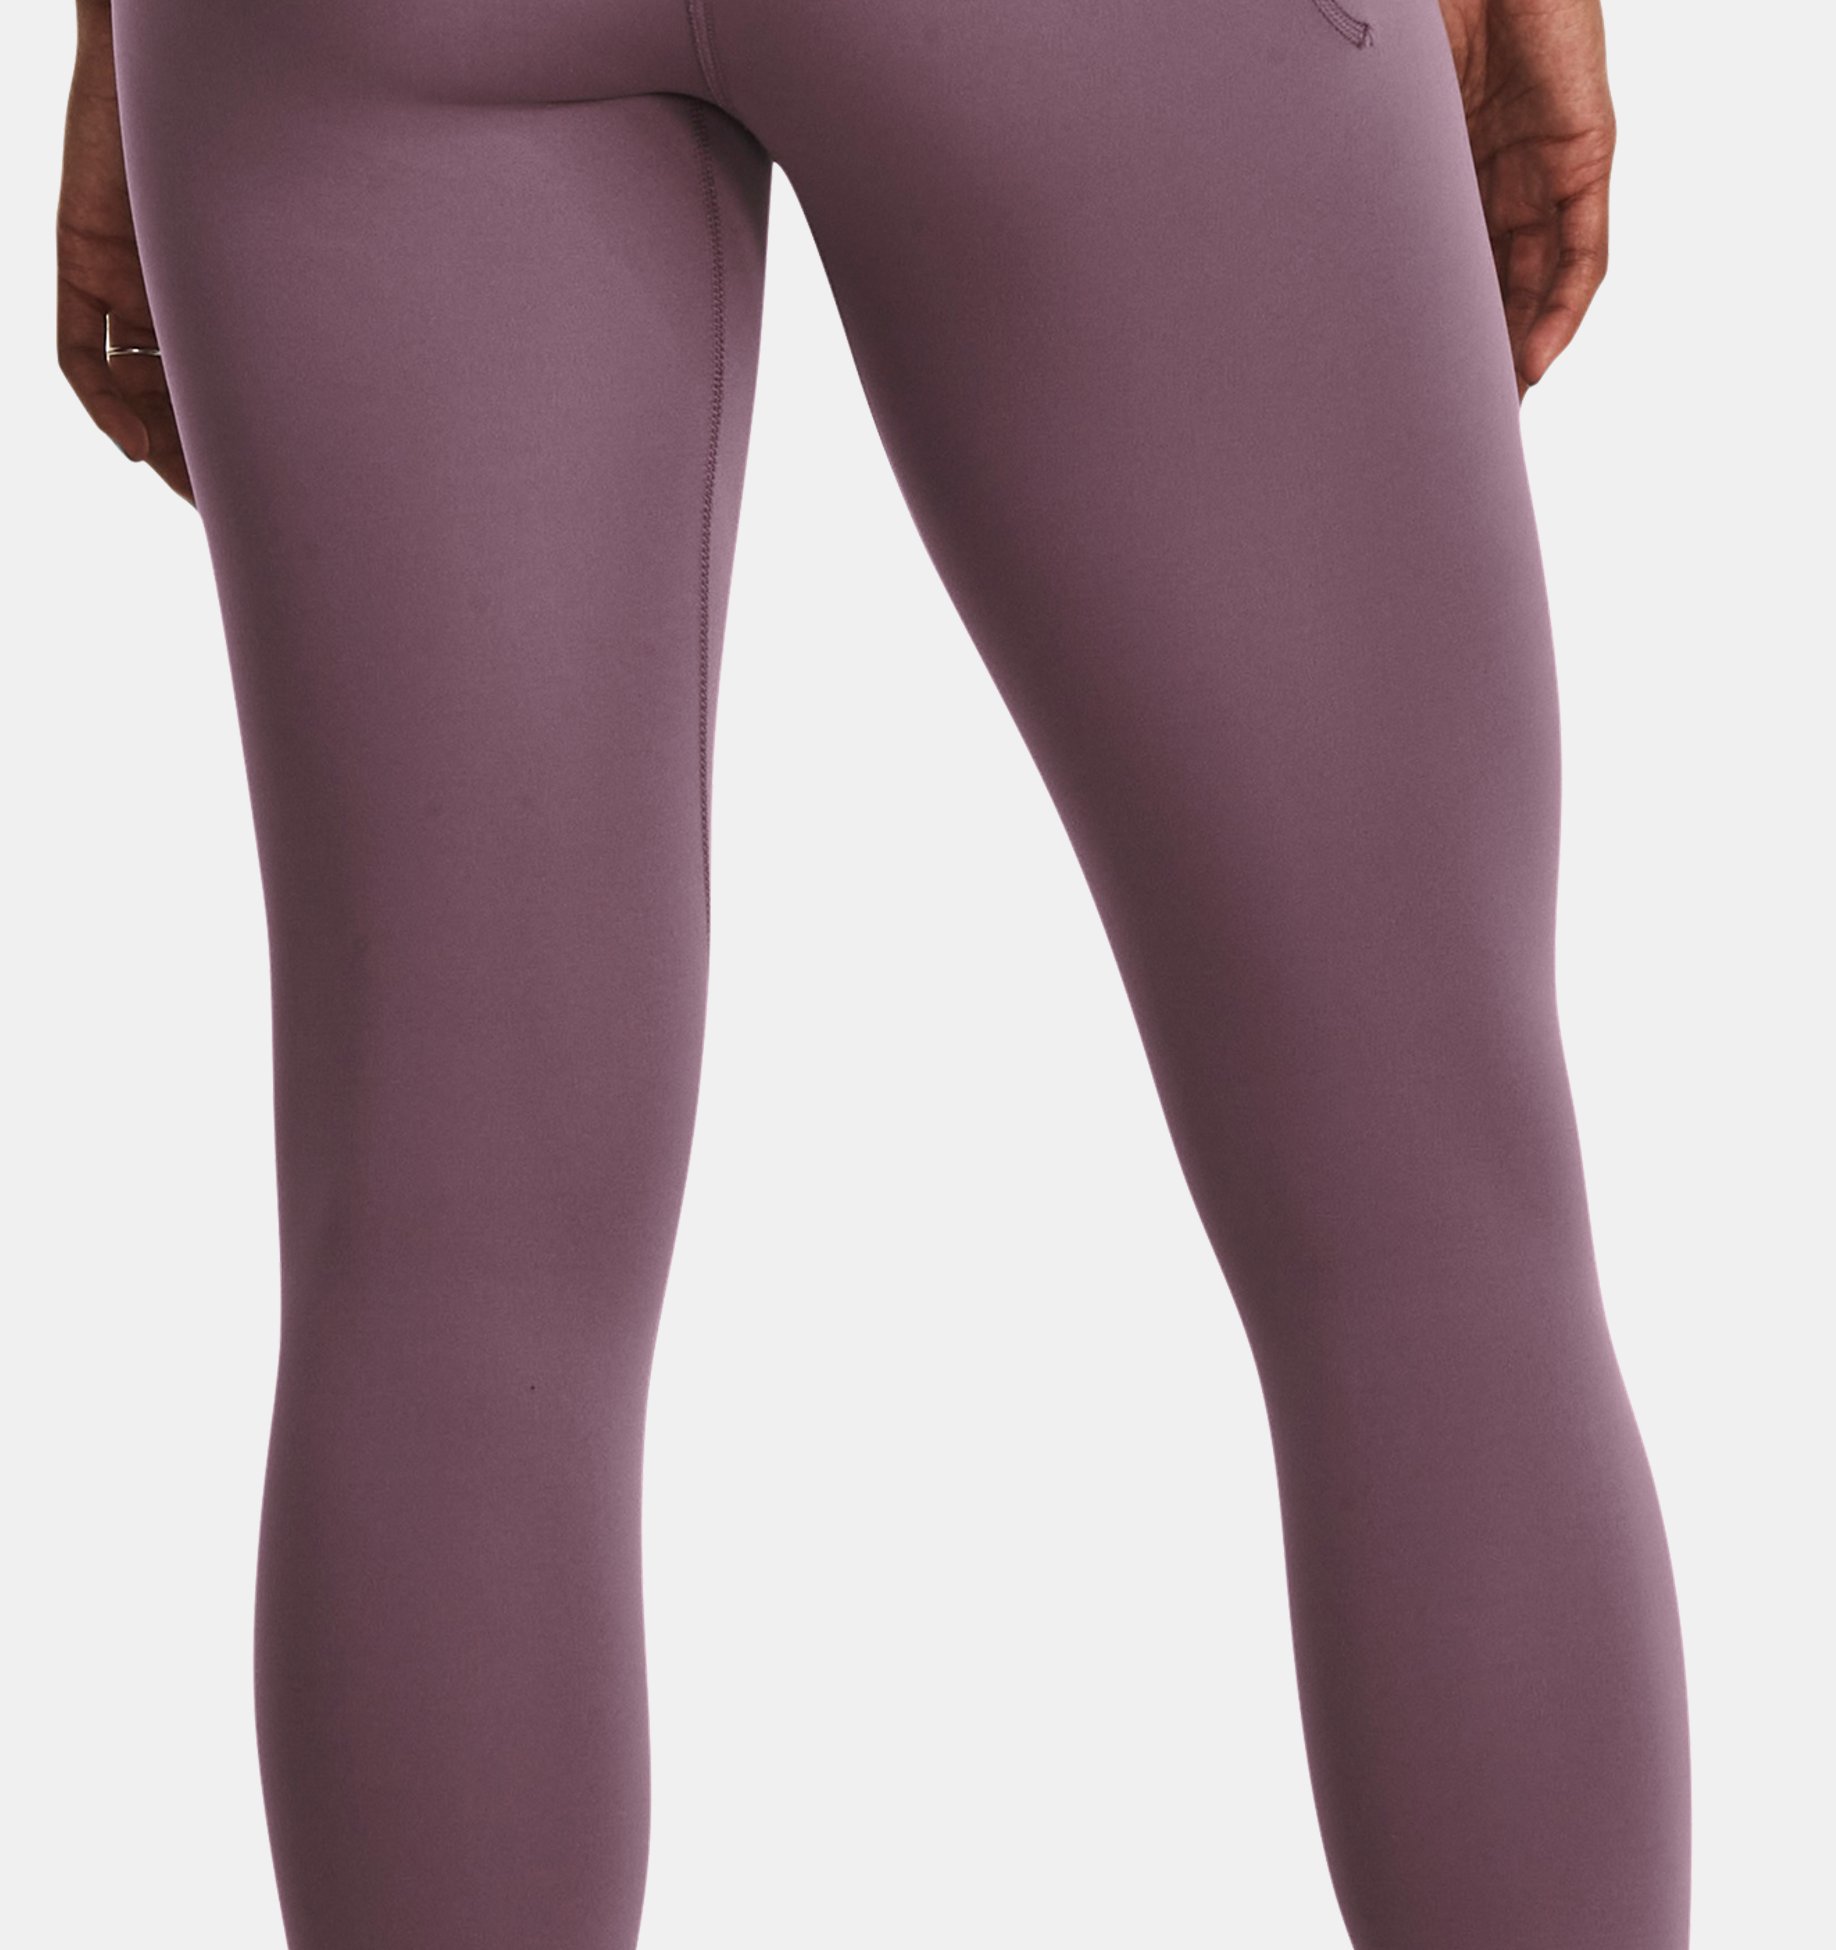  Meridian Ankle Leg, purple - women's leggings - UNDER ARMOUR  - 46.85 € - outdoorové oblečení a vybavení shop